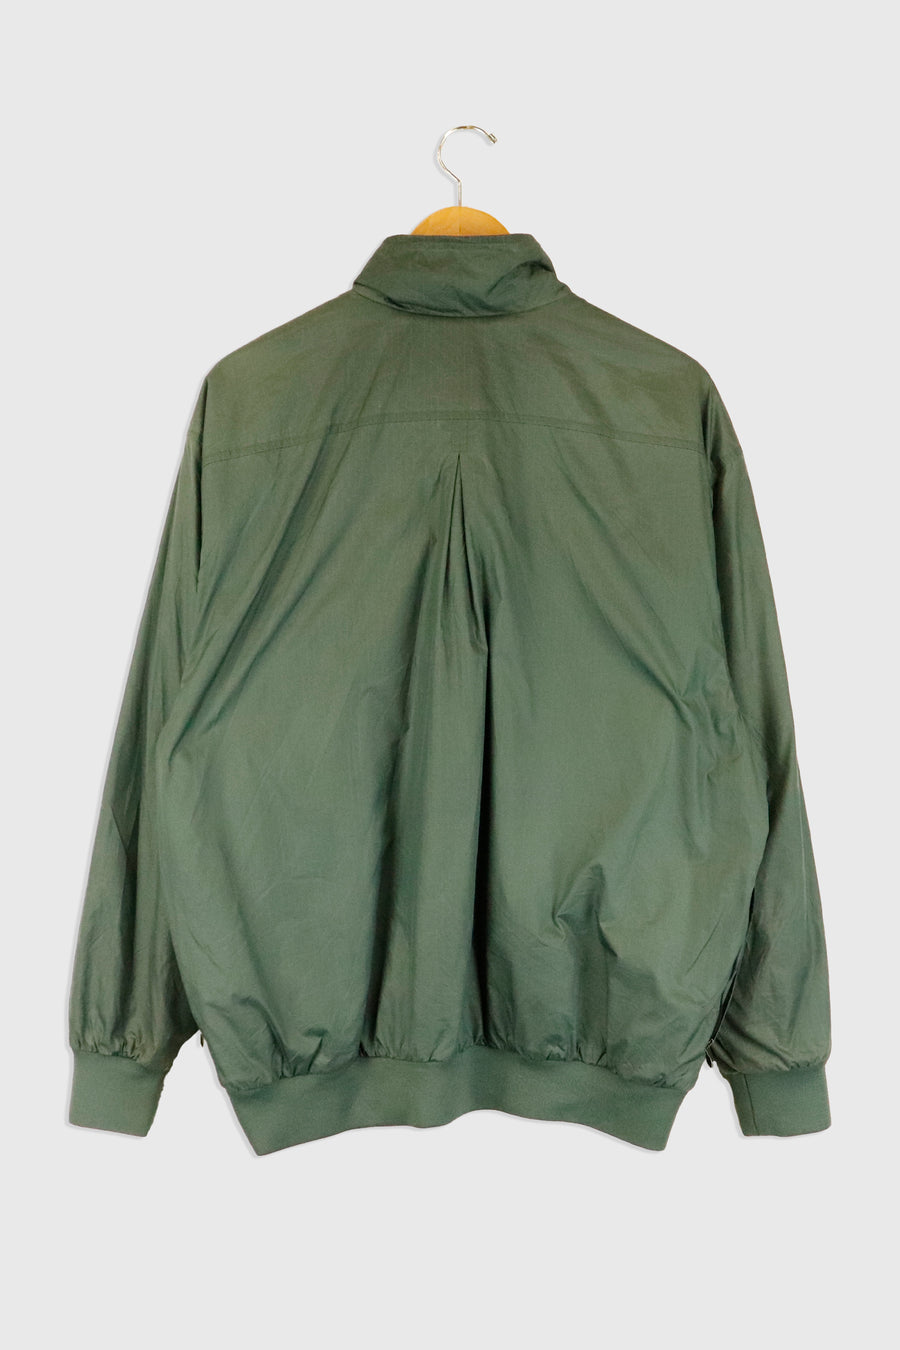 Vintage Nike Reversible Green To Black Full Zip Jacket